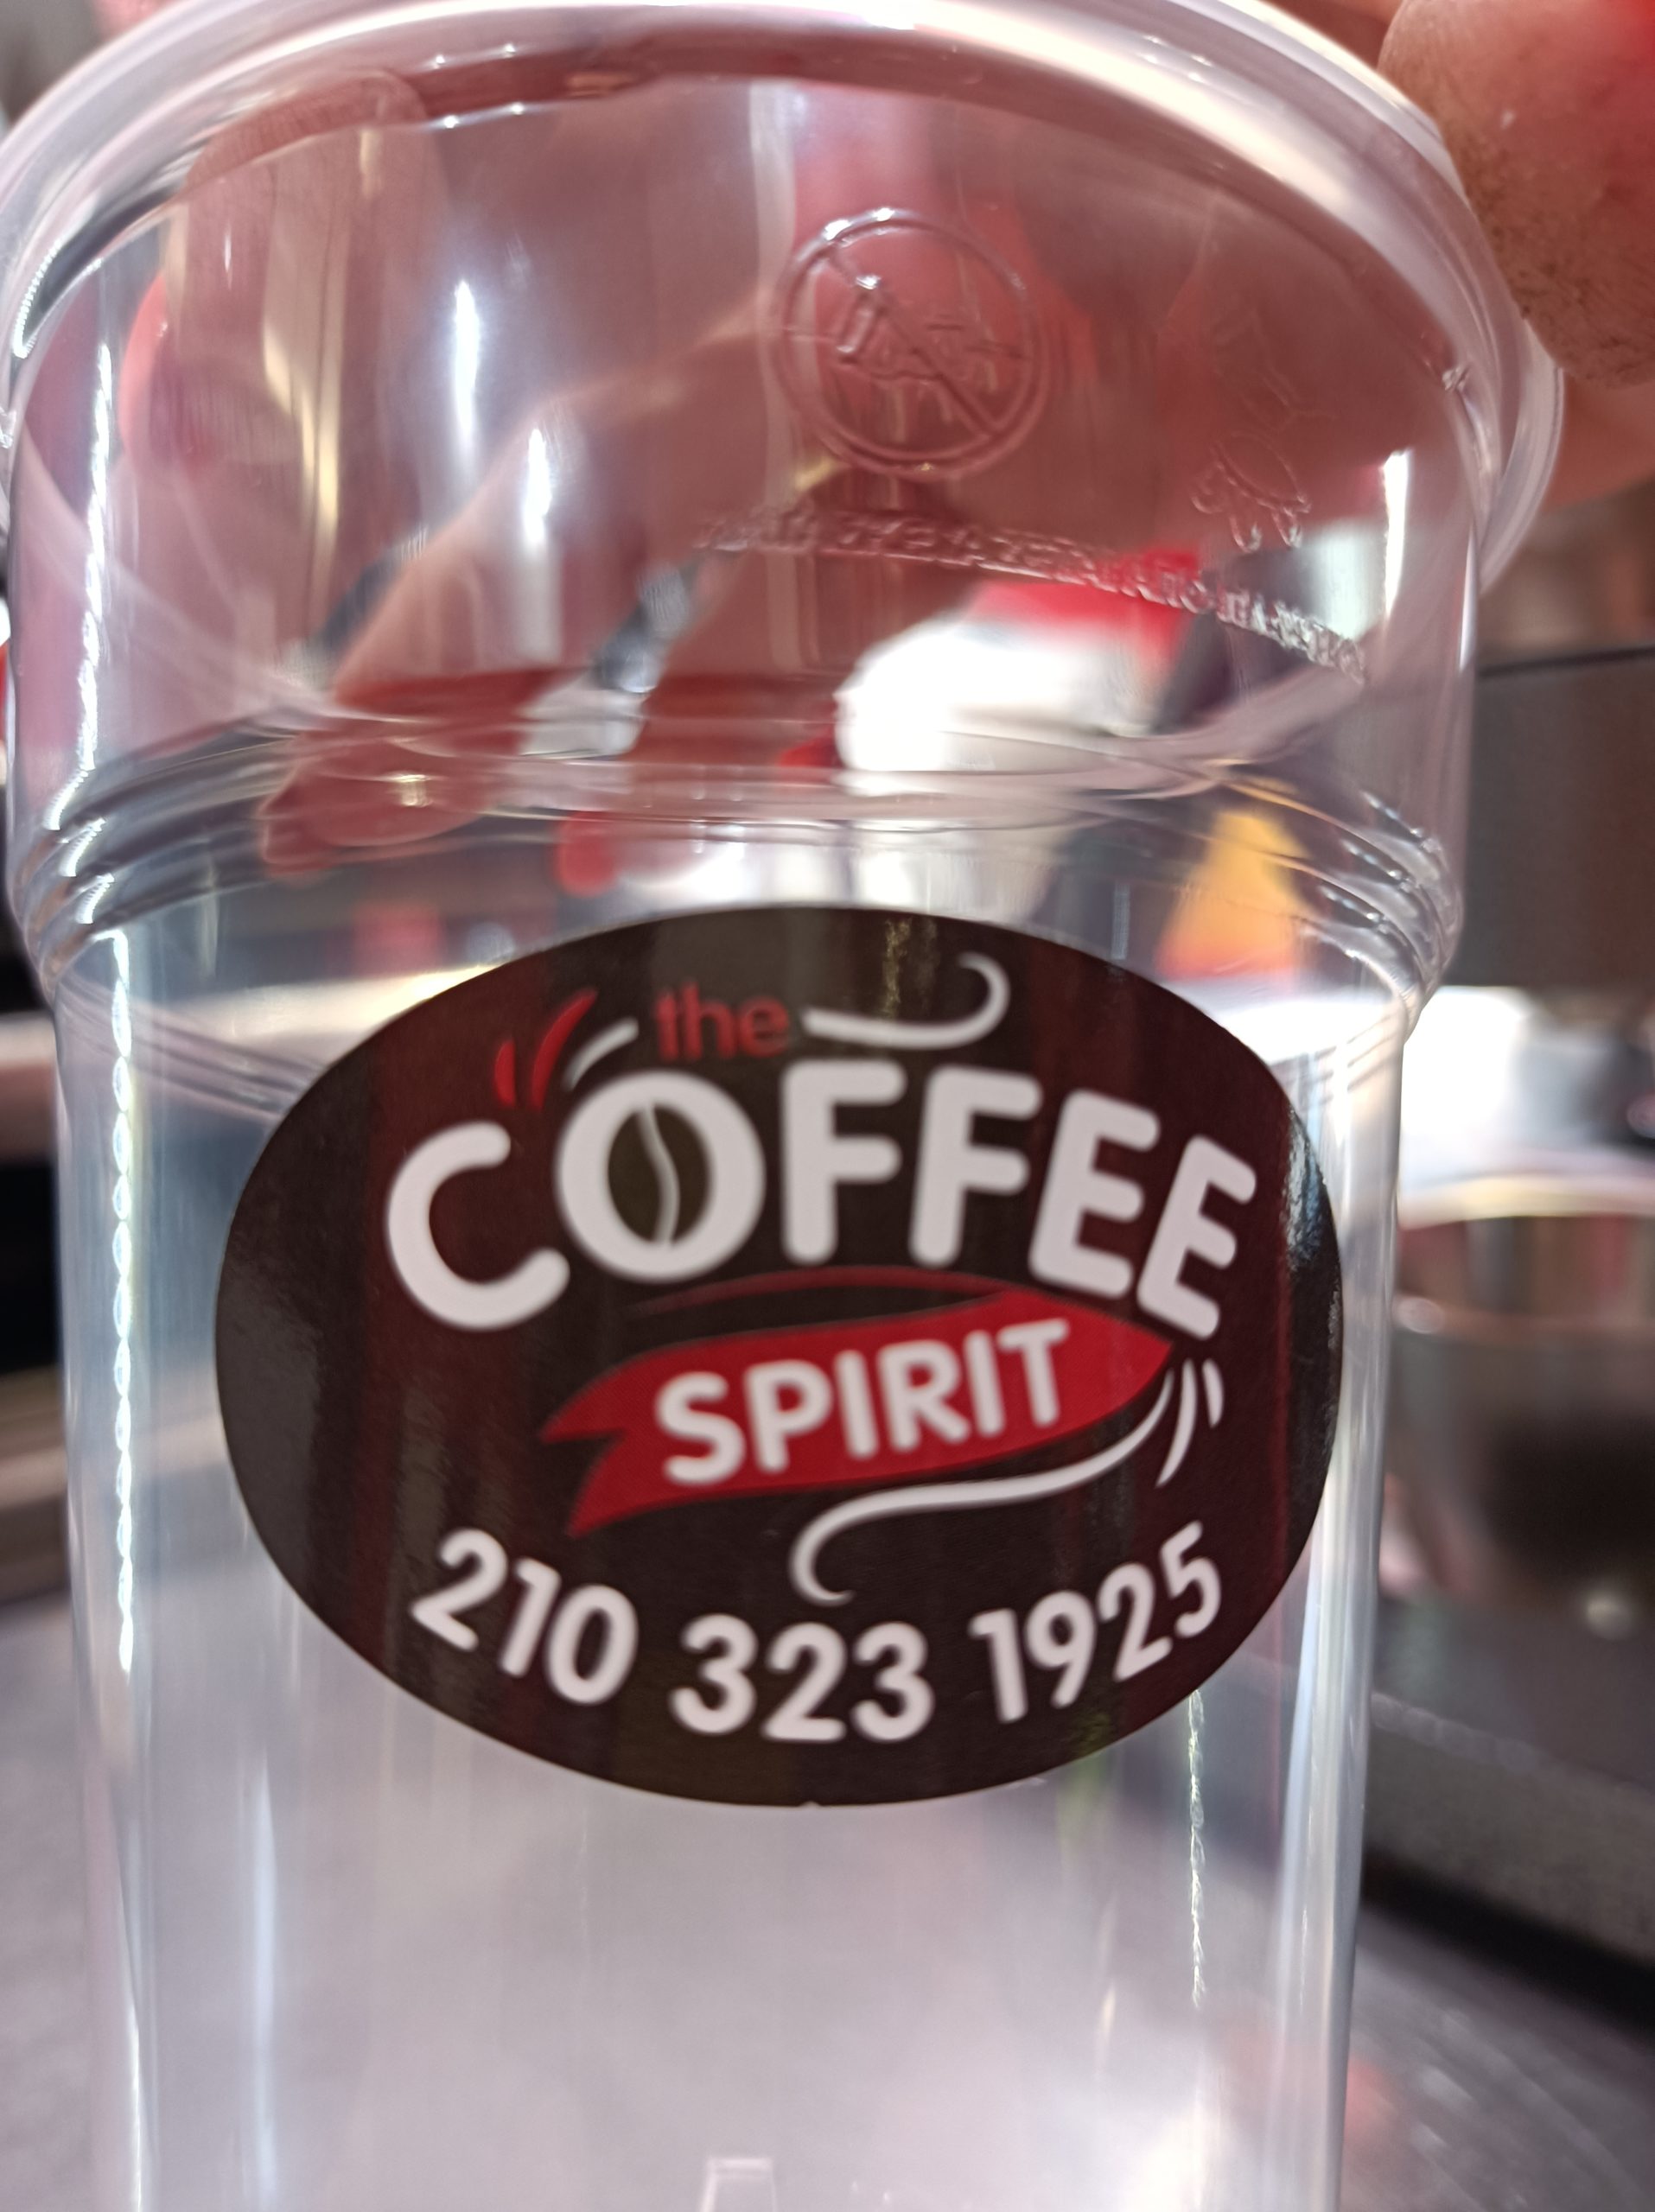 The coffee spirit